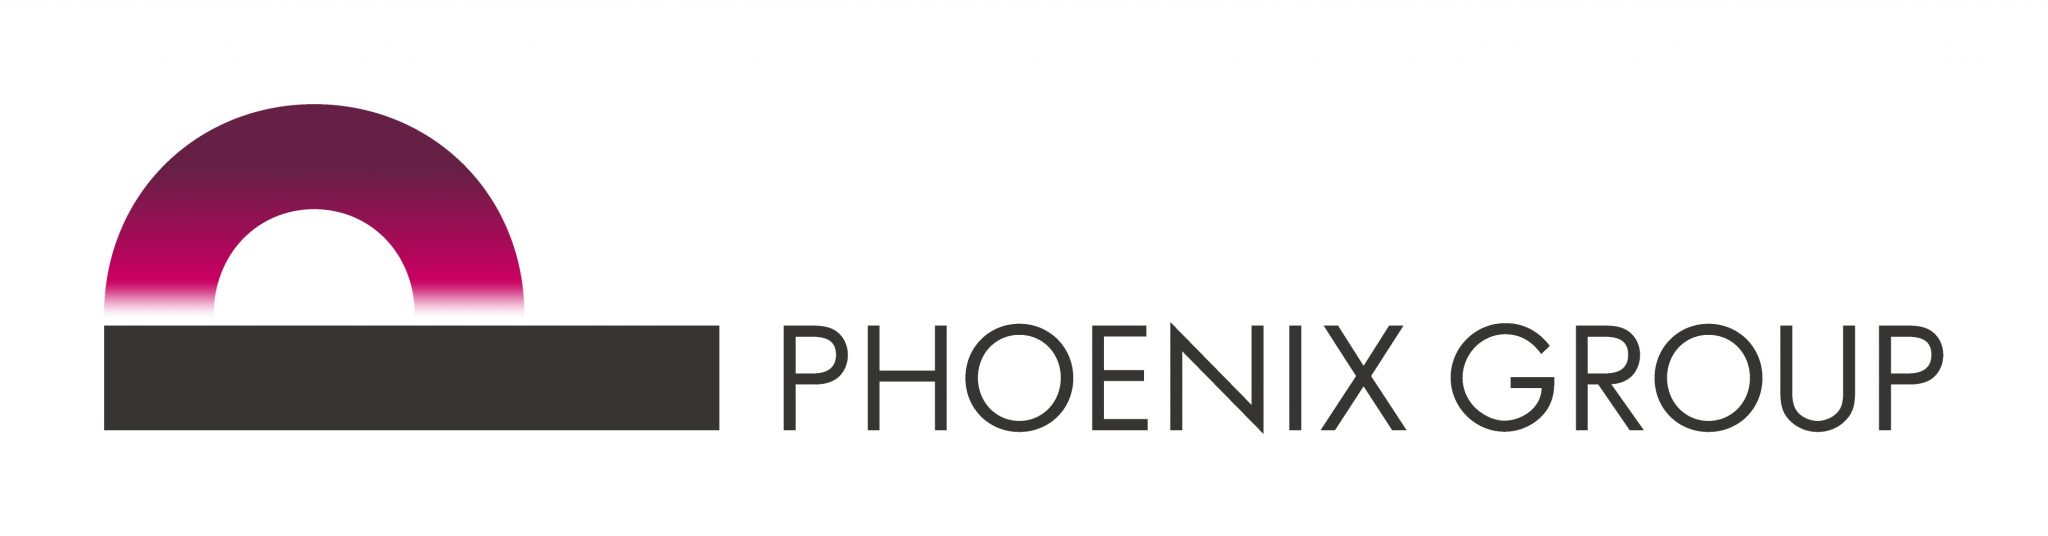 phoenix group ratings